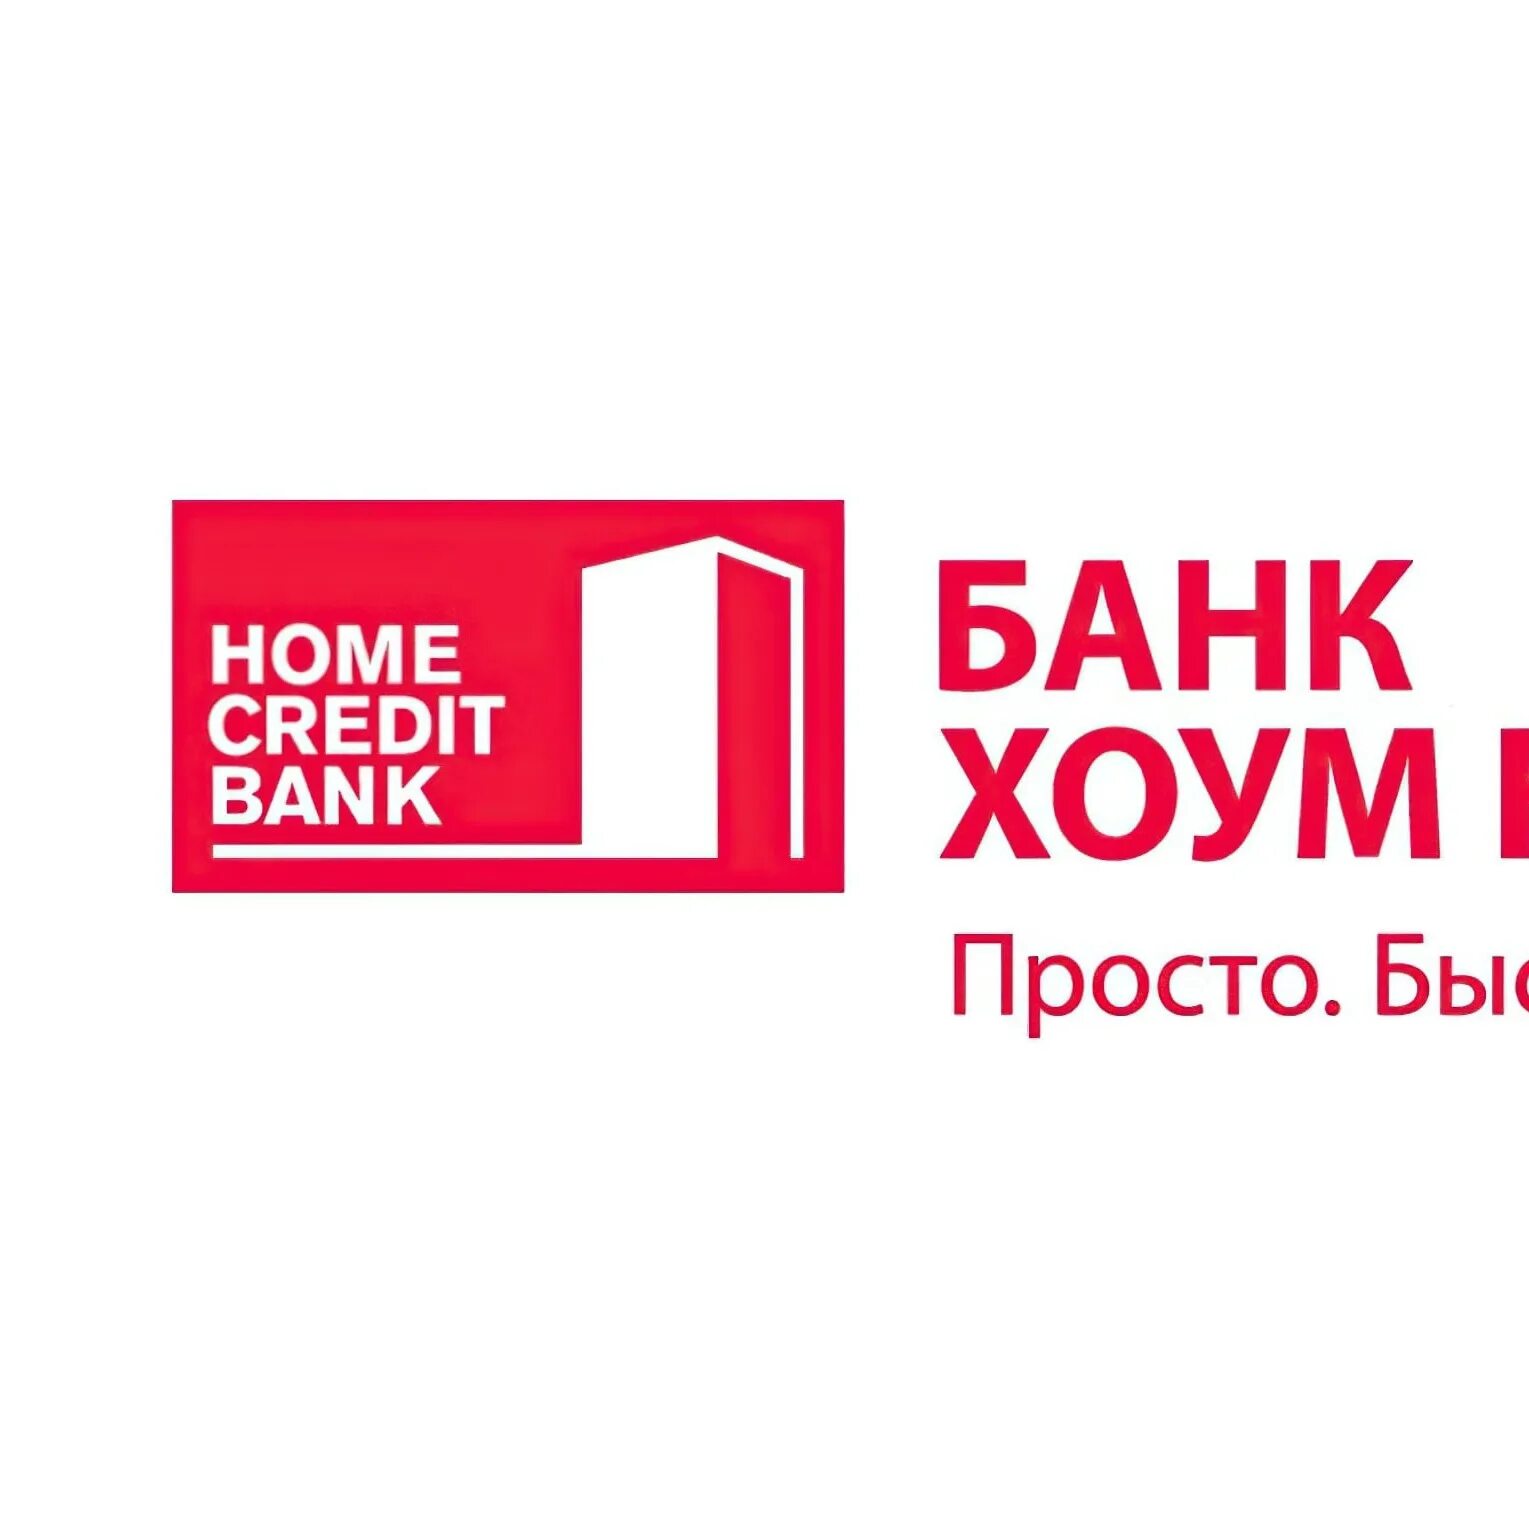 Home credit bank kazakhstan блоггер. Хоум кредит. Home credit логотип. ХКФ банк. Home кредит банк.